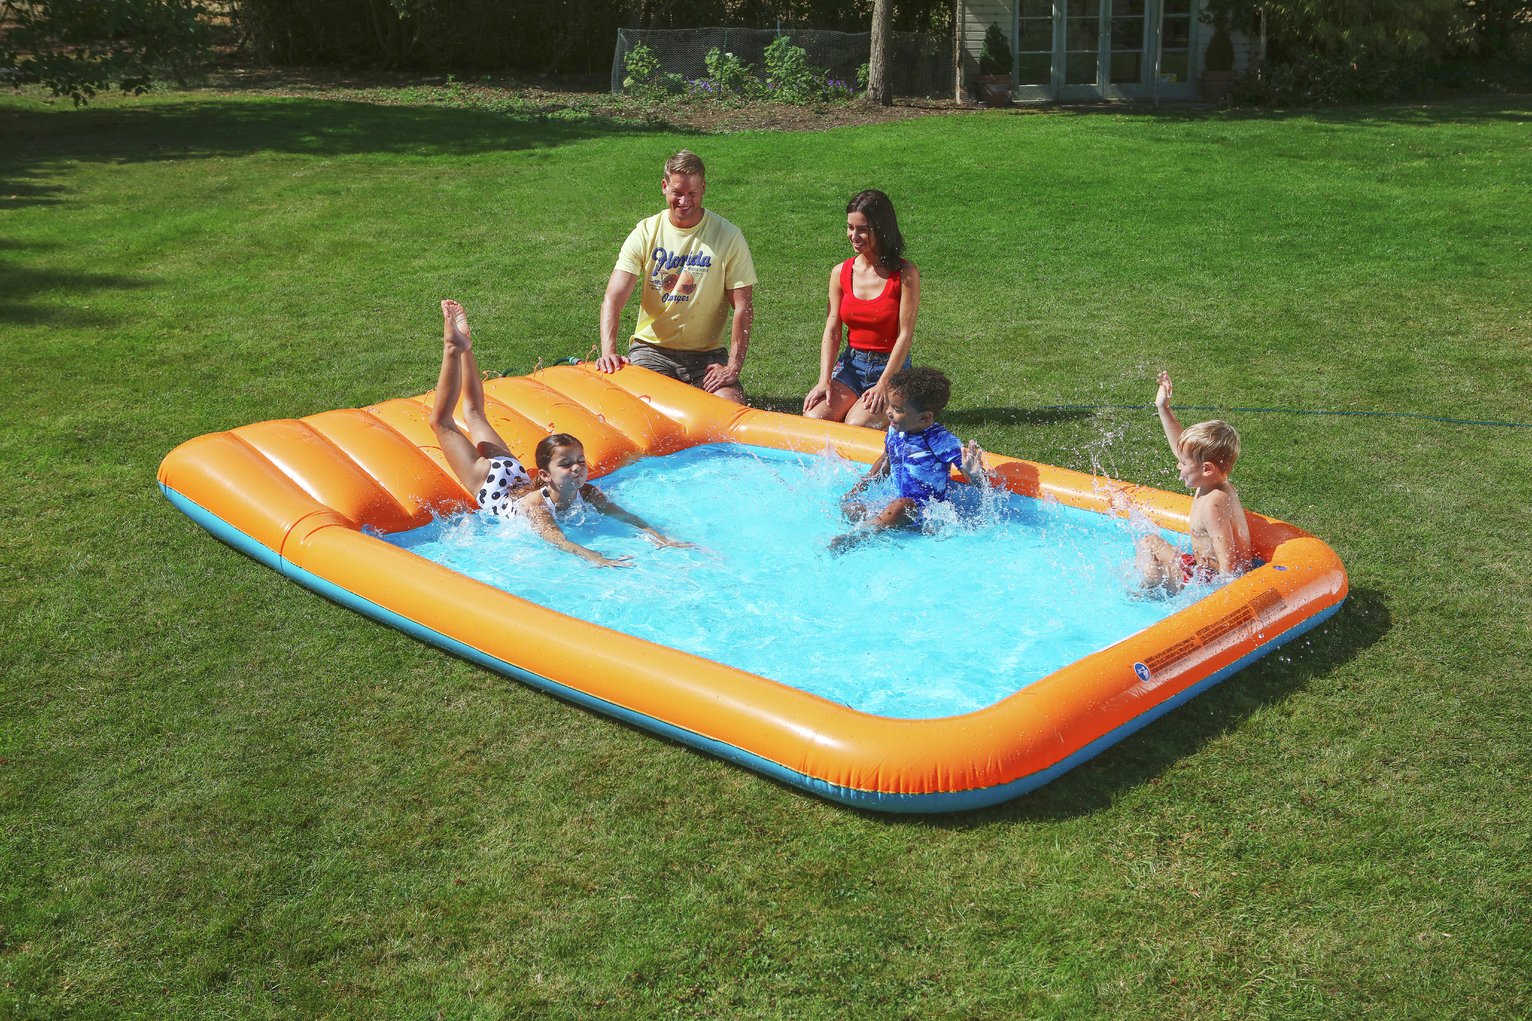 Chad Valley 11ft Slide in Splash Kids Paddling Pool Review